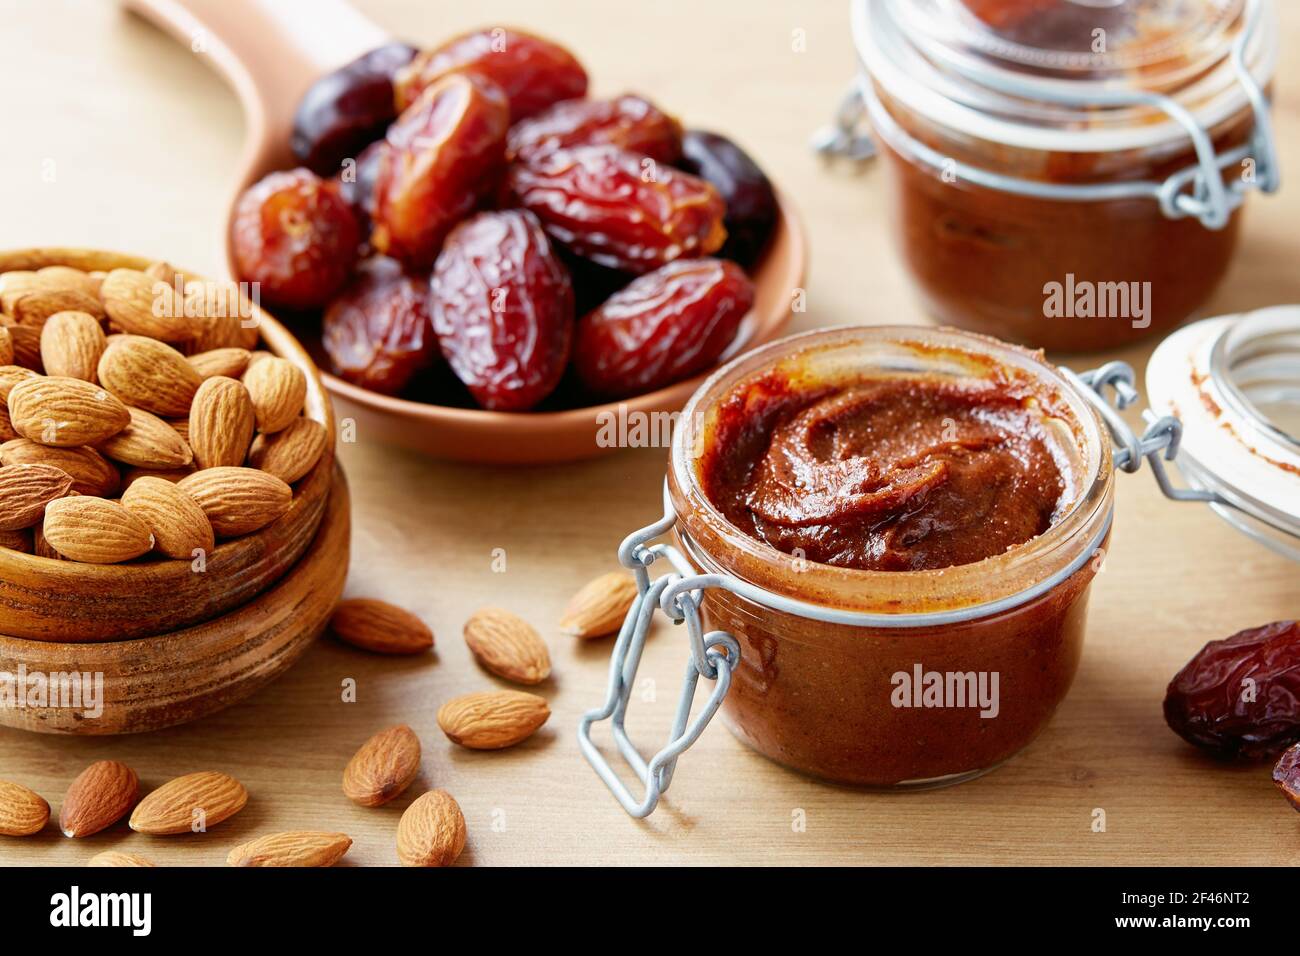 Vegan date spread with almonds (sugar-free). Jar of homemade vegan date spread. Stock Photo